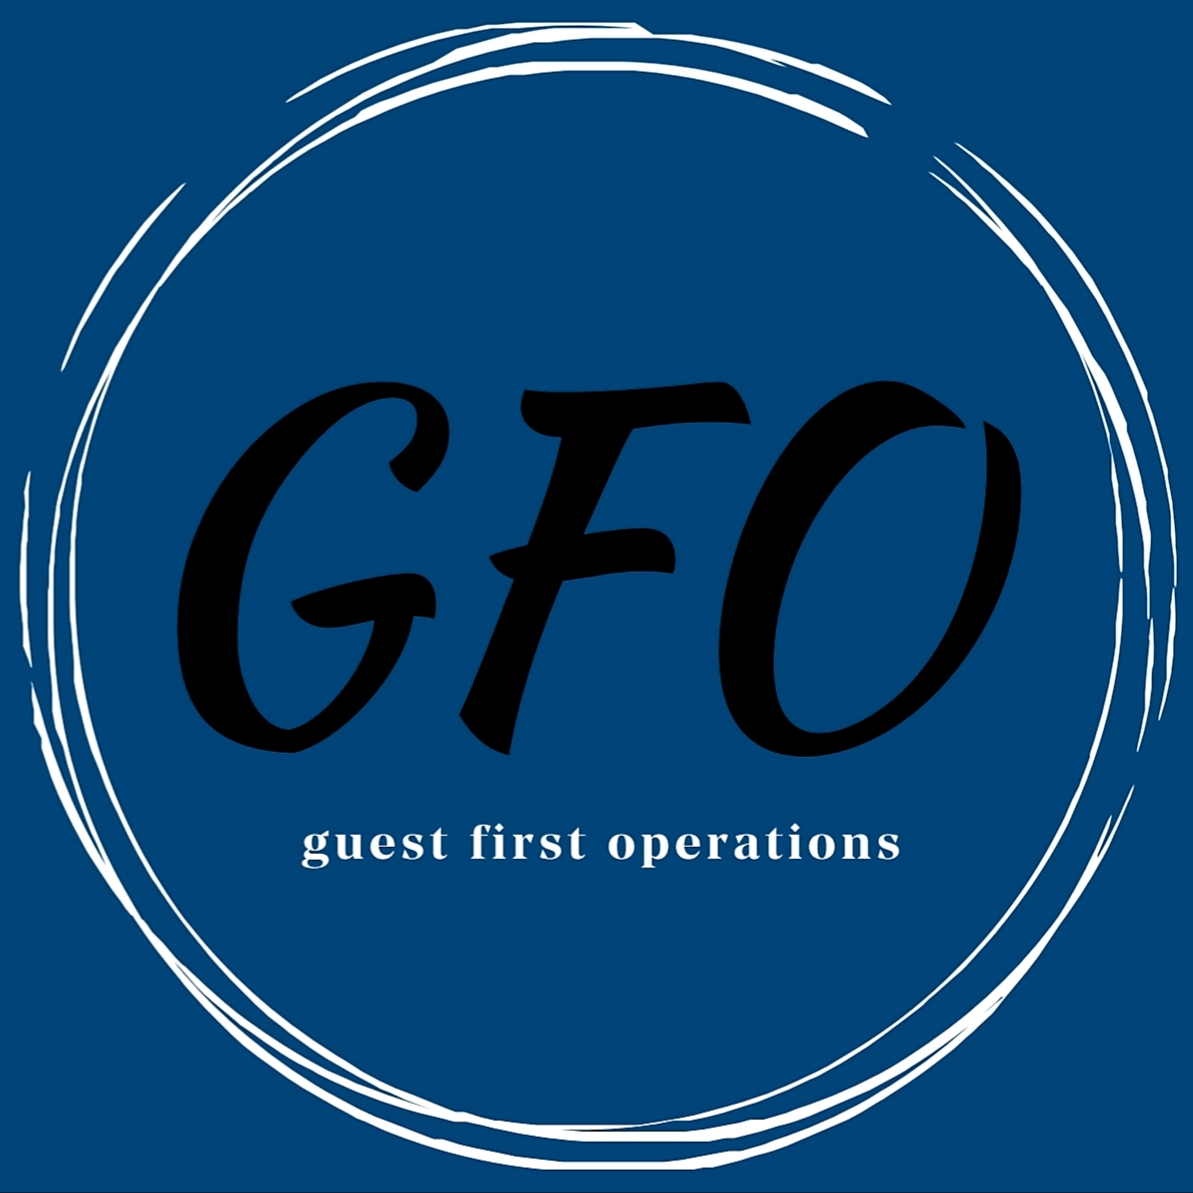 GFO Operational Inspection